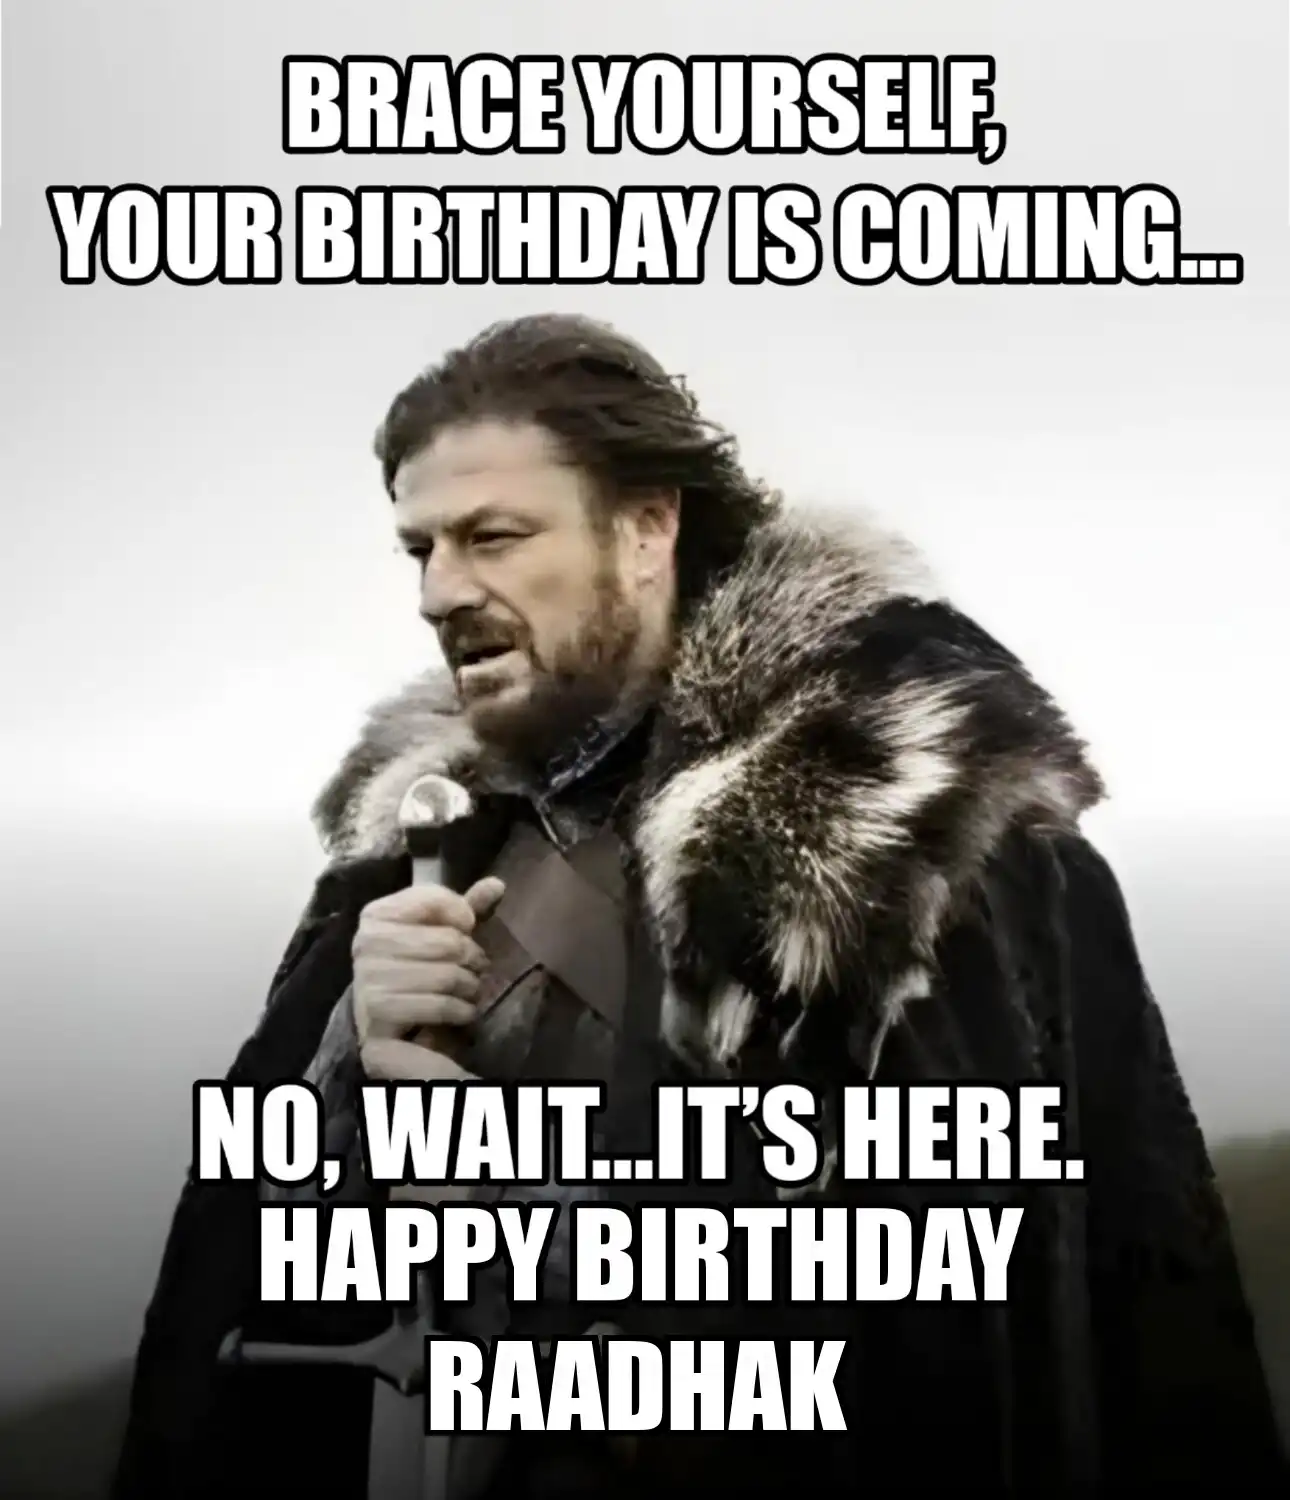 Happy Birthday Raadhak Brace Yourself Your Birthday Is Coming Meme